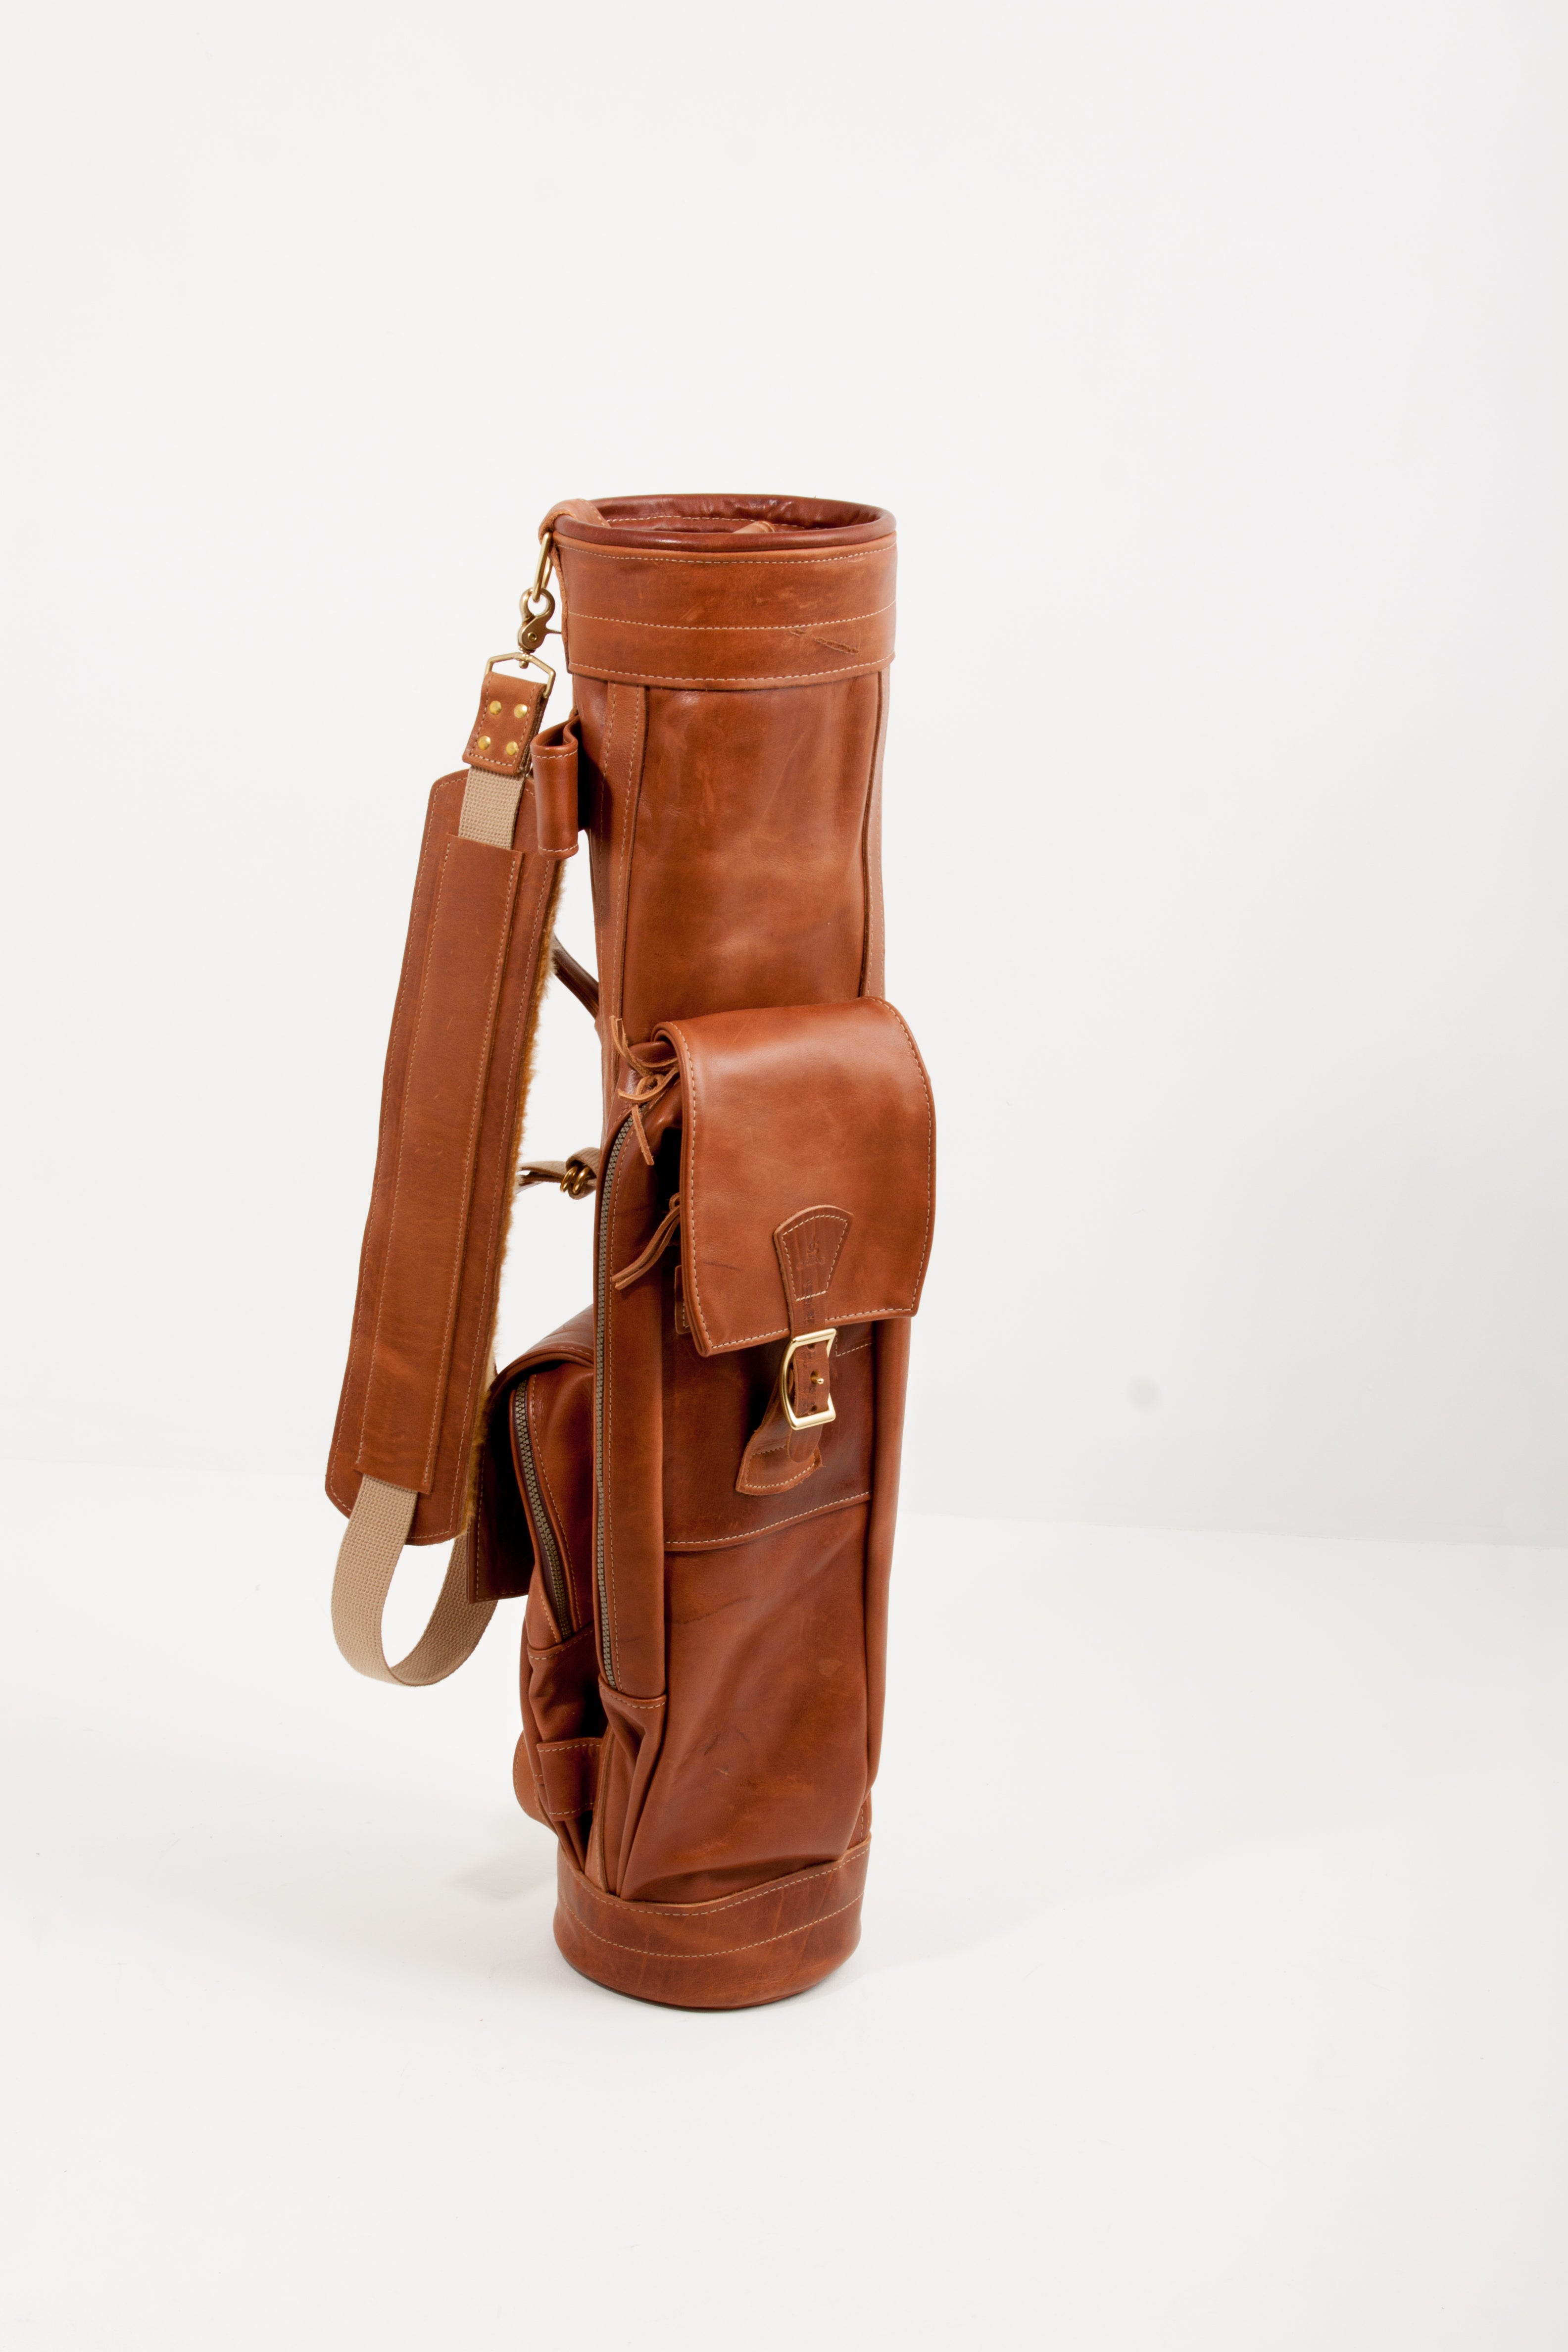 Custom Leather Tour Golf Bag – Ace of Clubs Golf Company